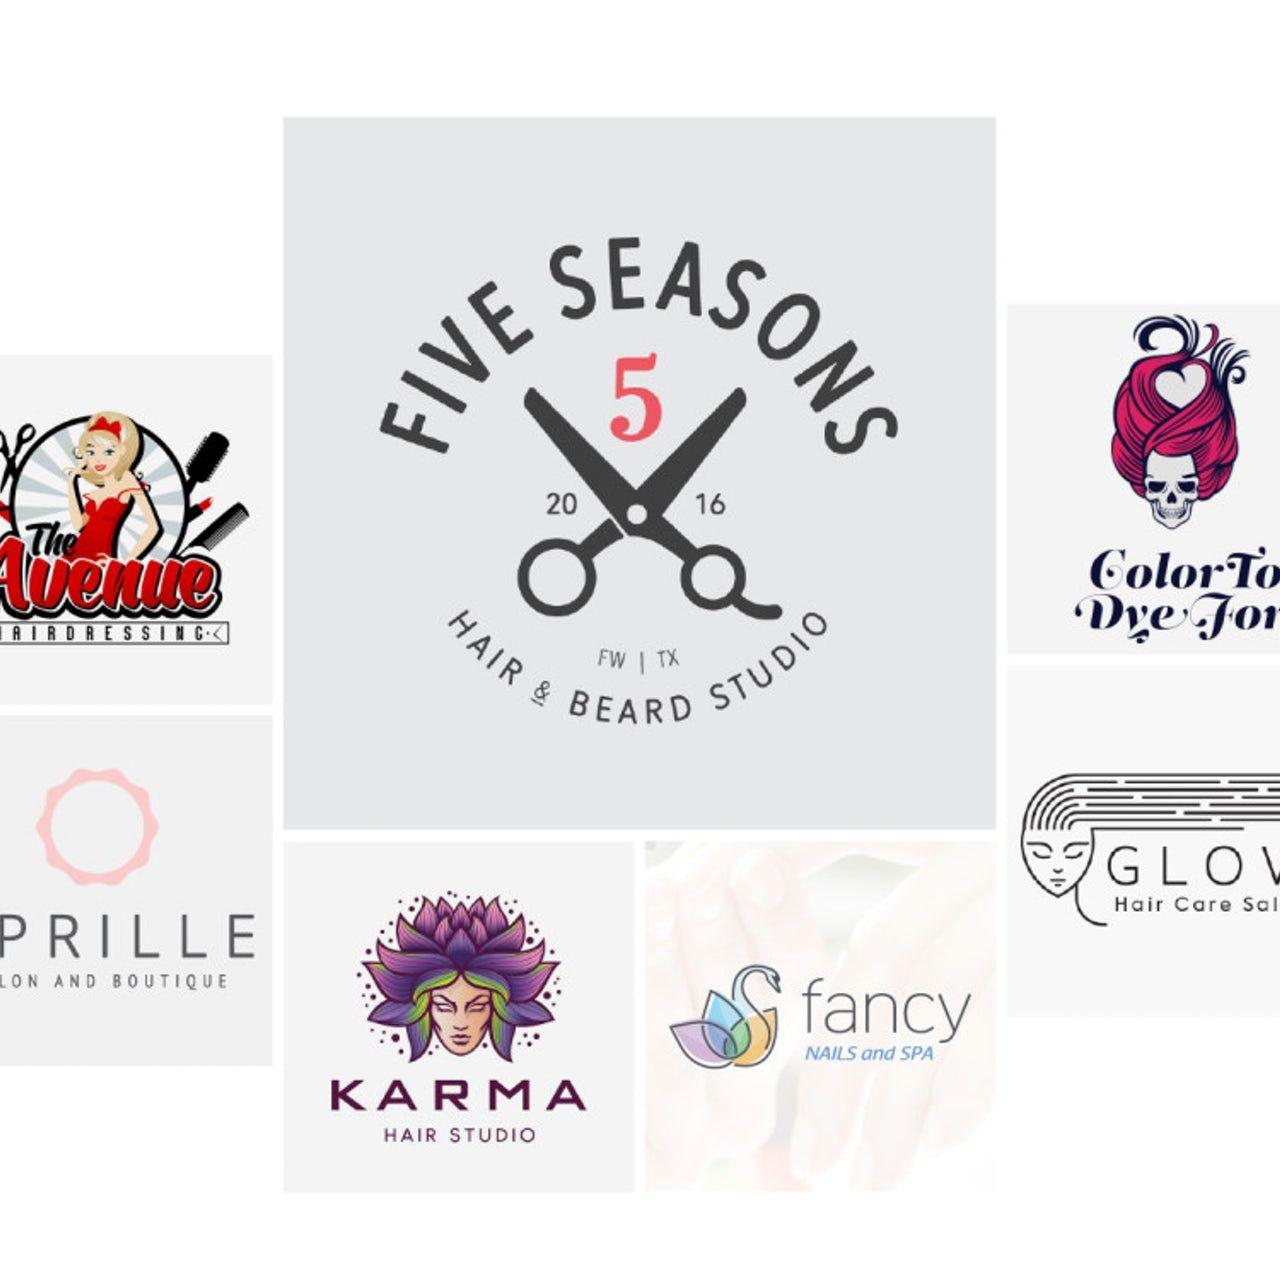 Hairdresser Logo - salon, stylist & hairdresser logos that will make you look your